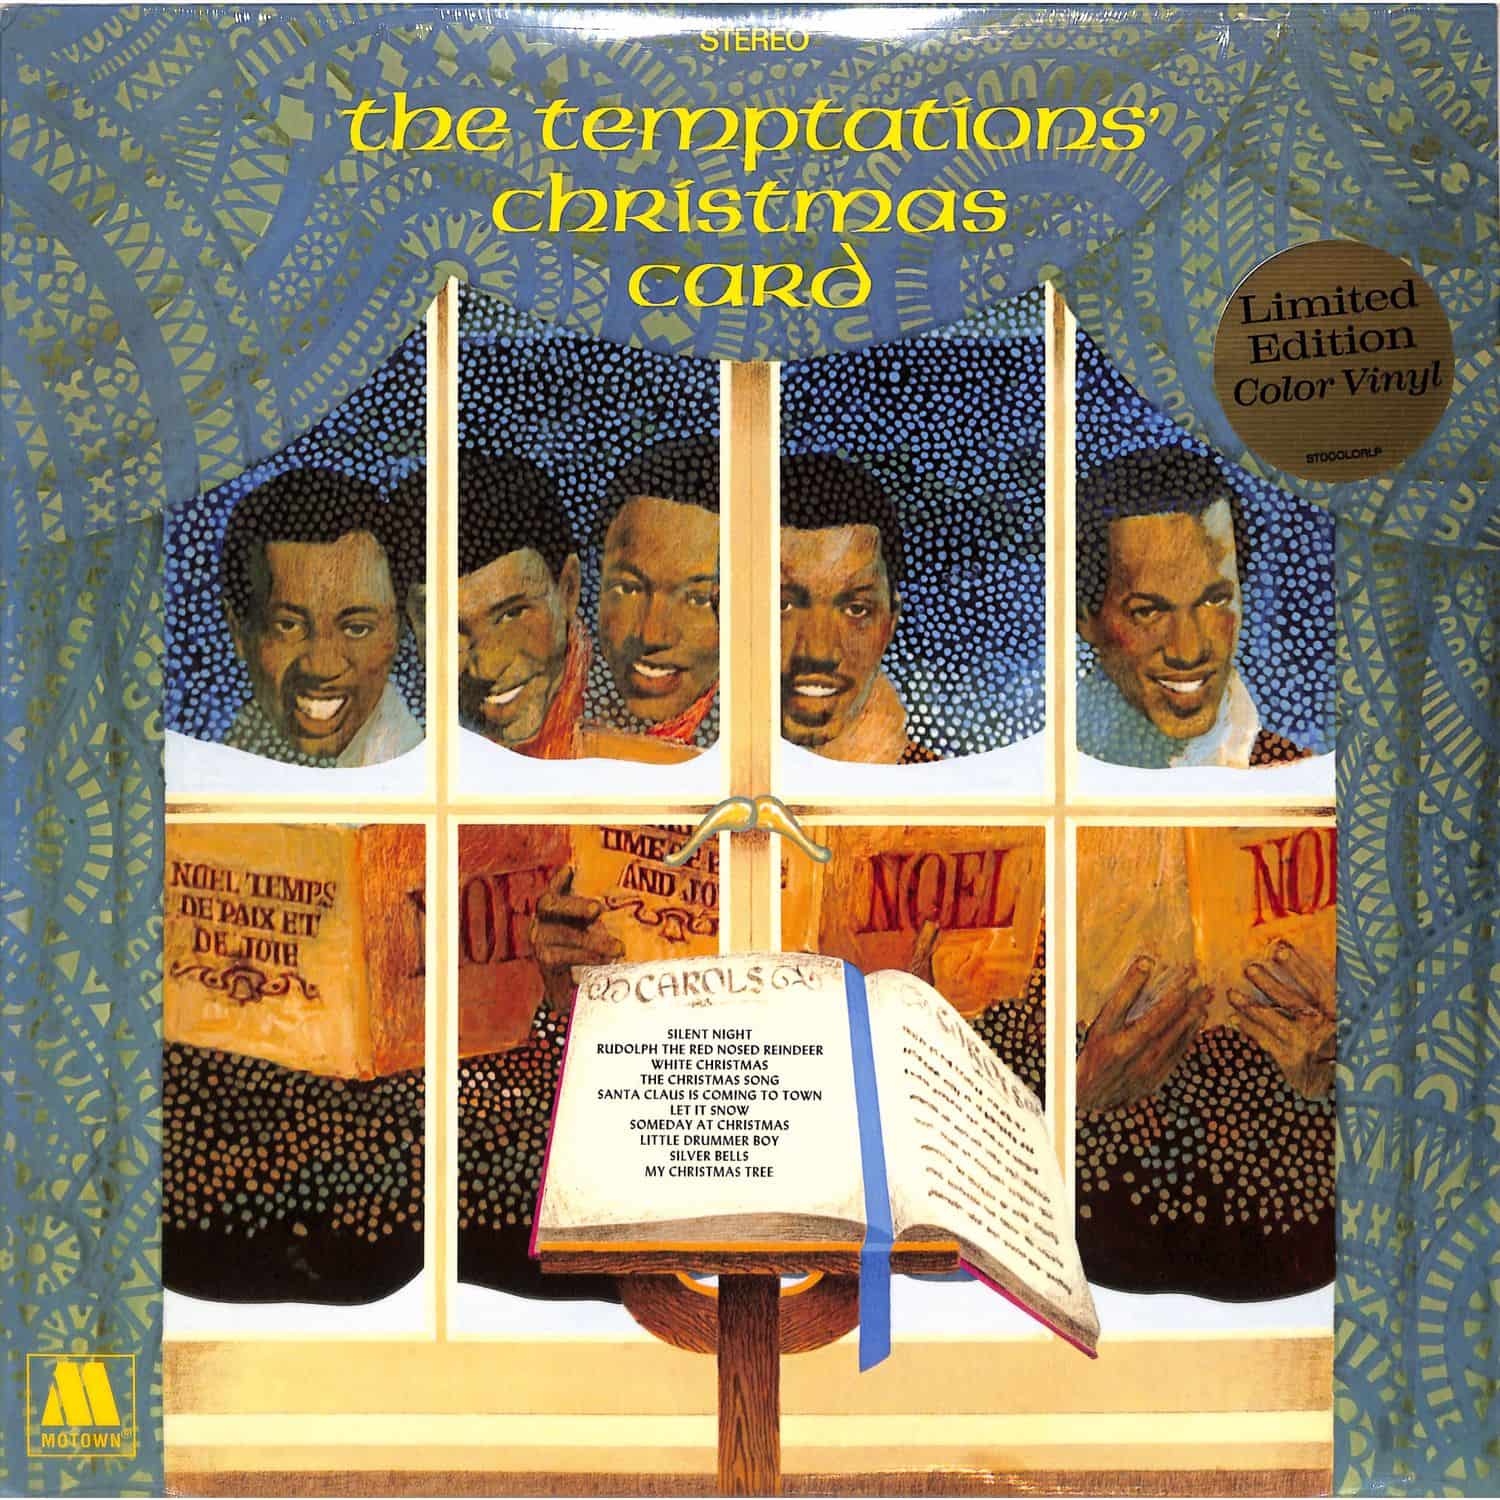 The Temptations - CHRISTMAS CARD 